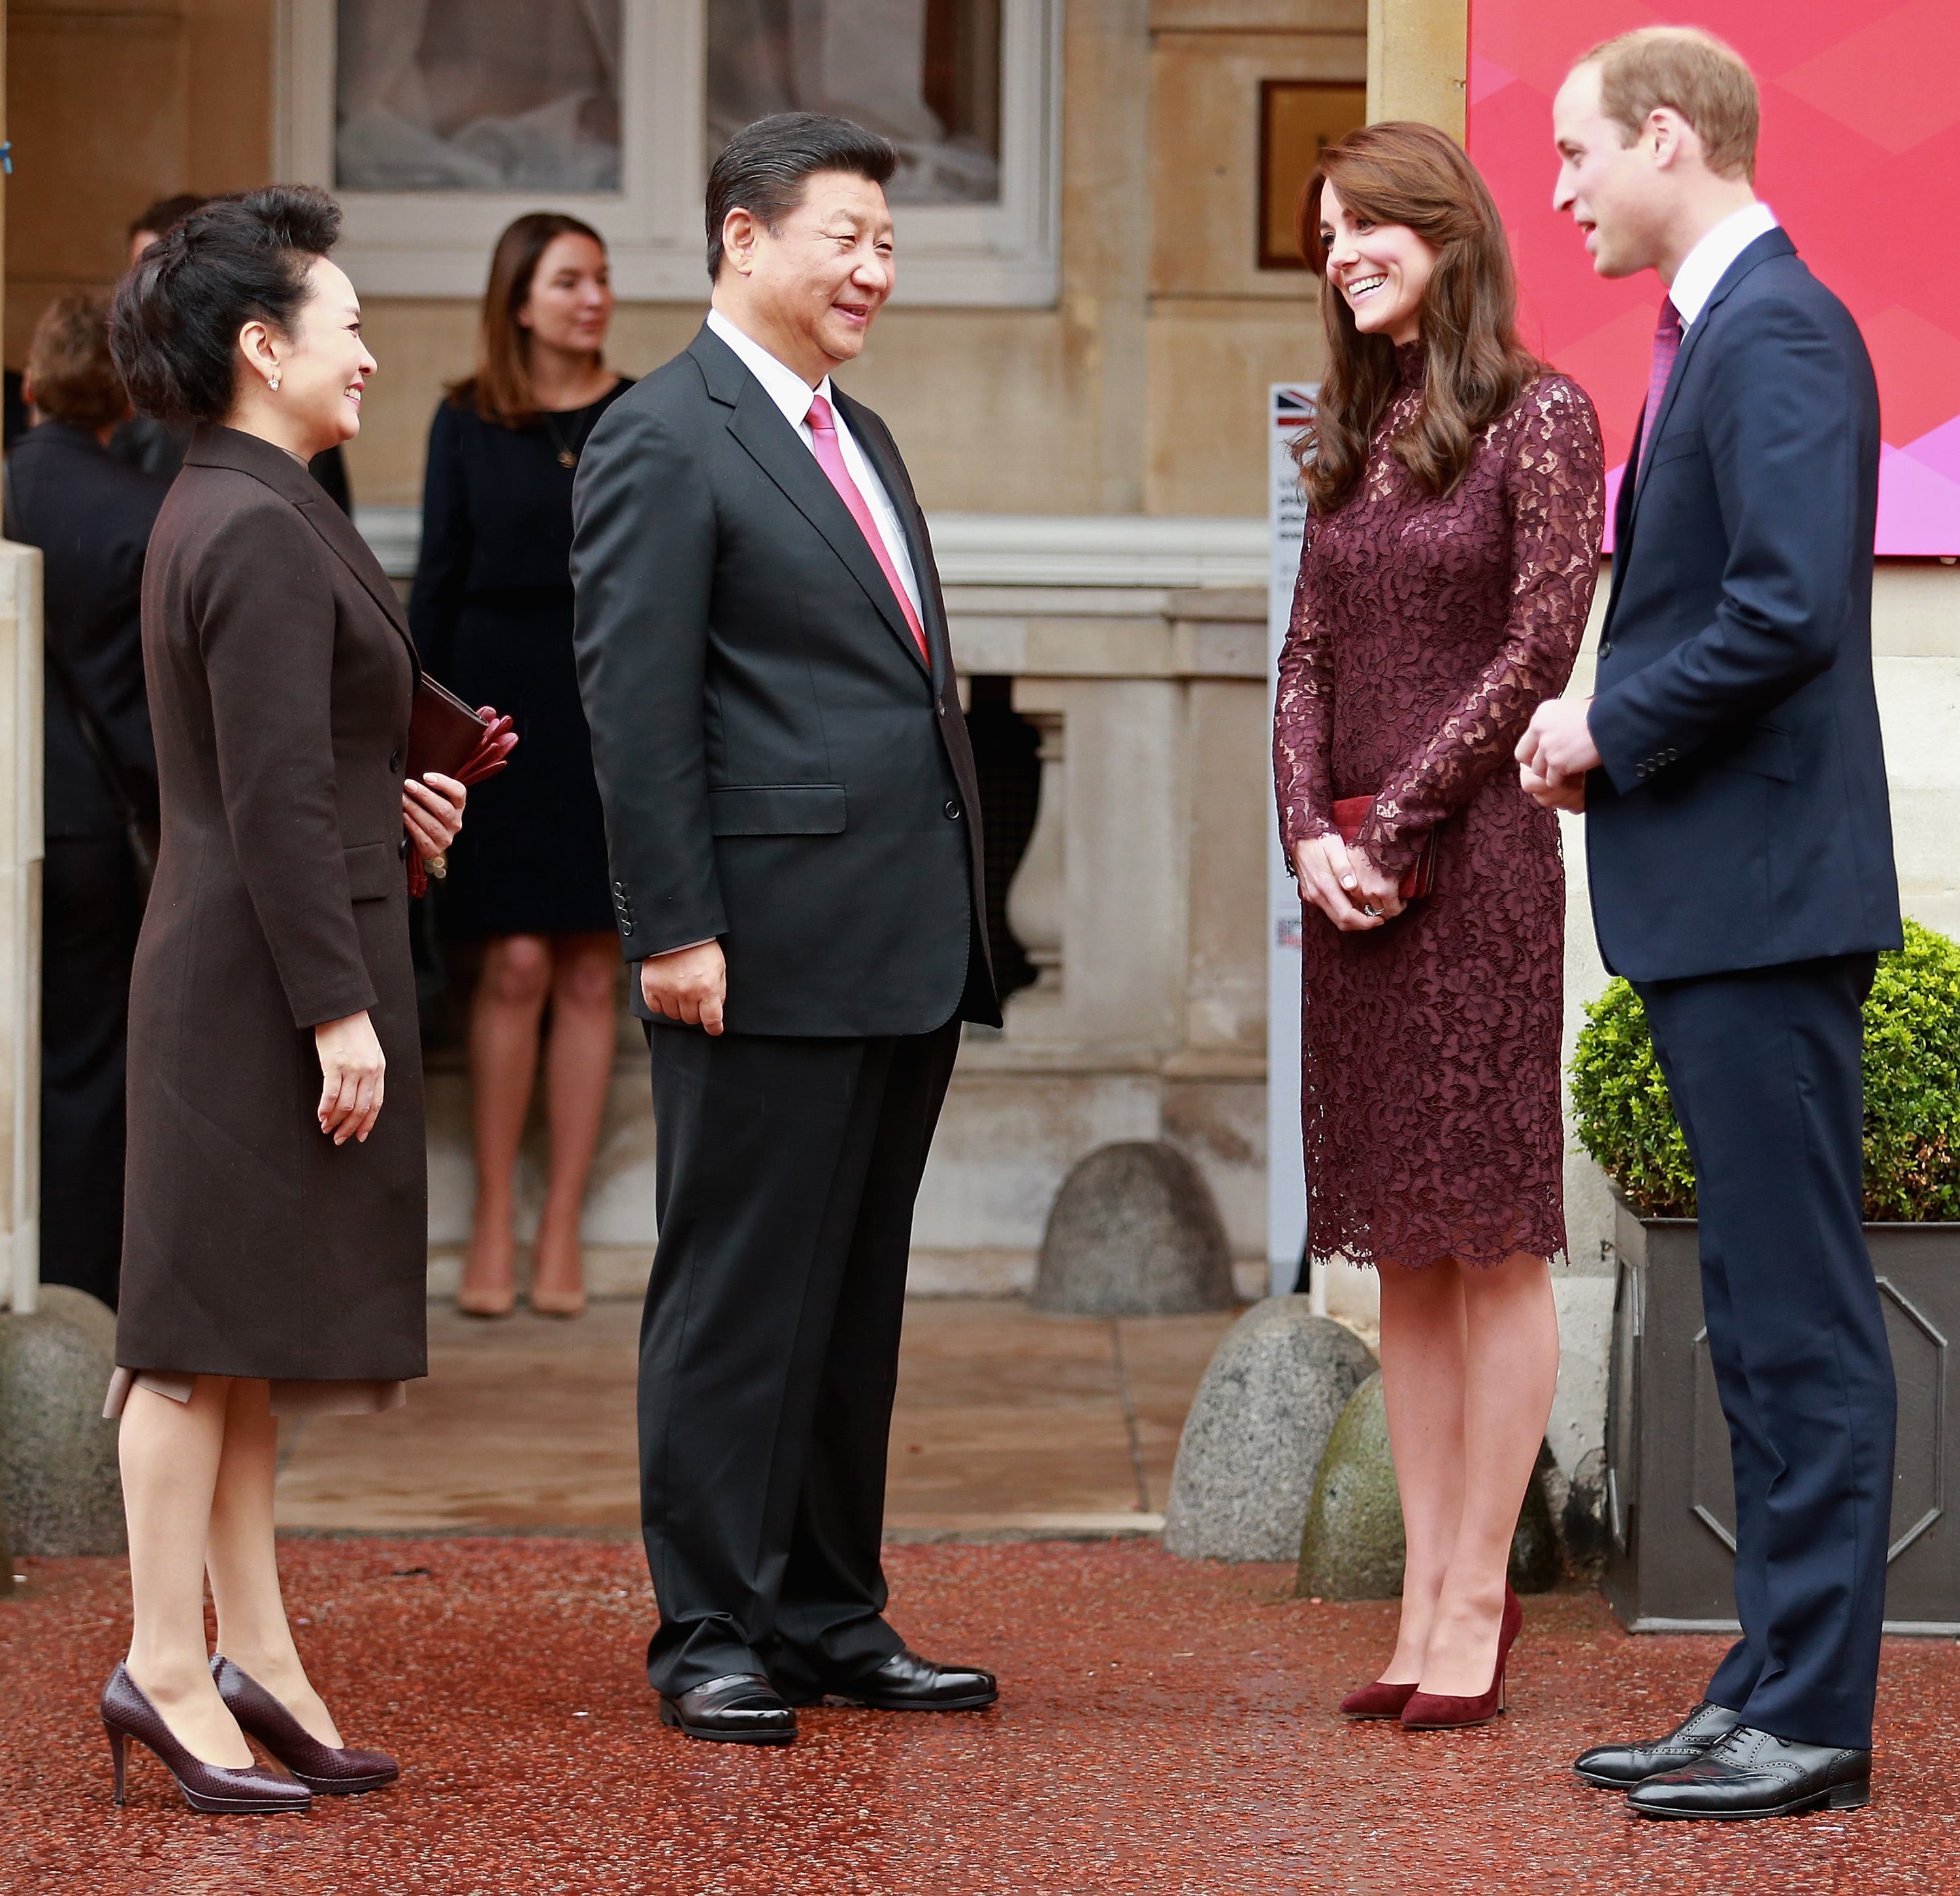 Copy Kate Middleton's purple lace dress for LESS than £40